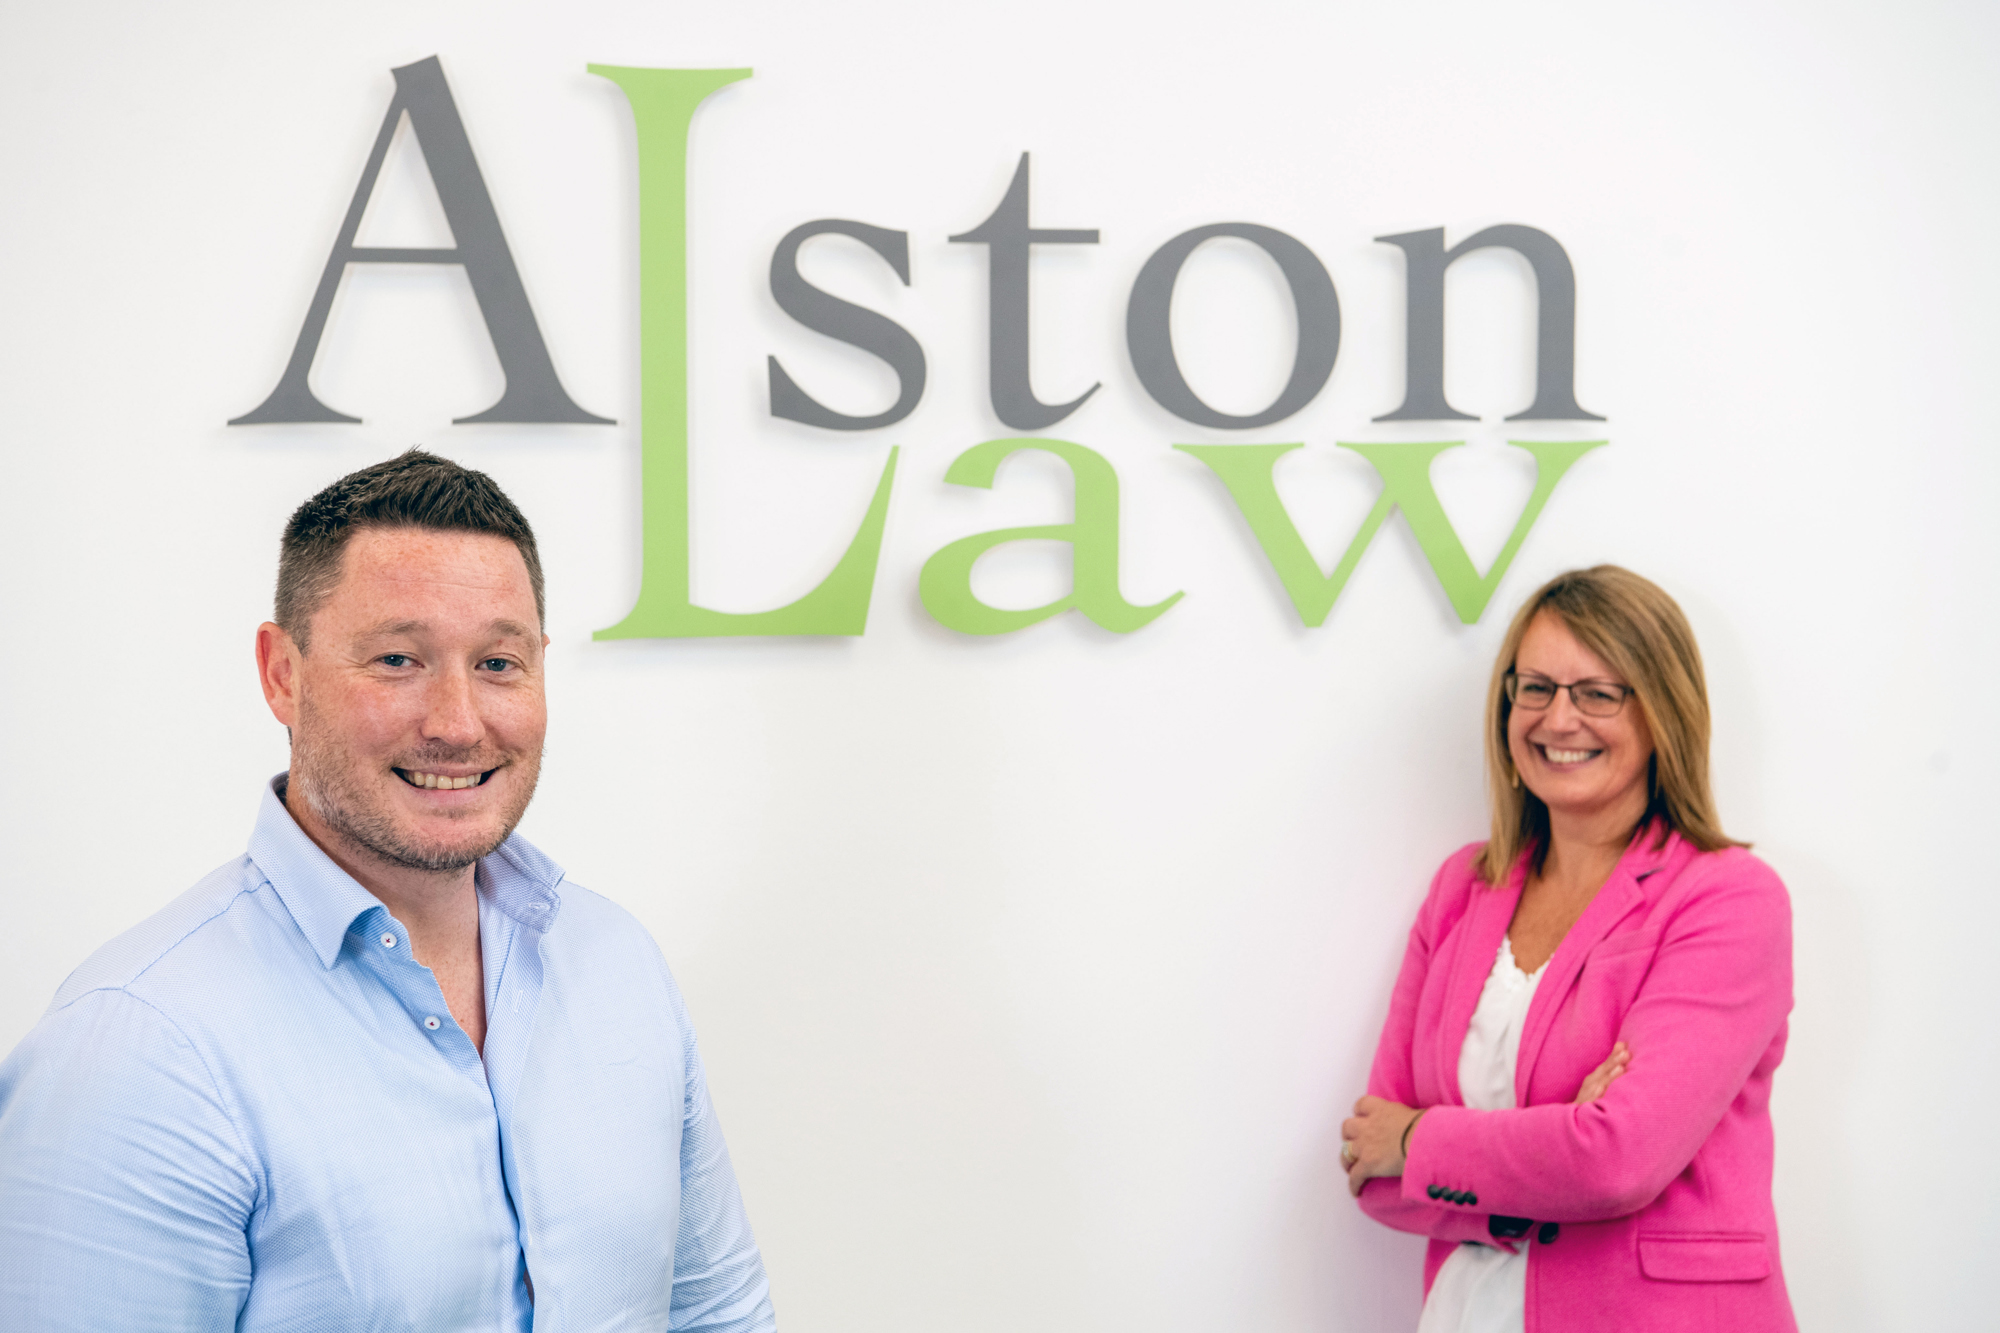 Simpson & Marwick scoops up Alston Law